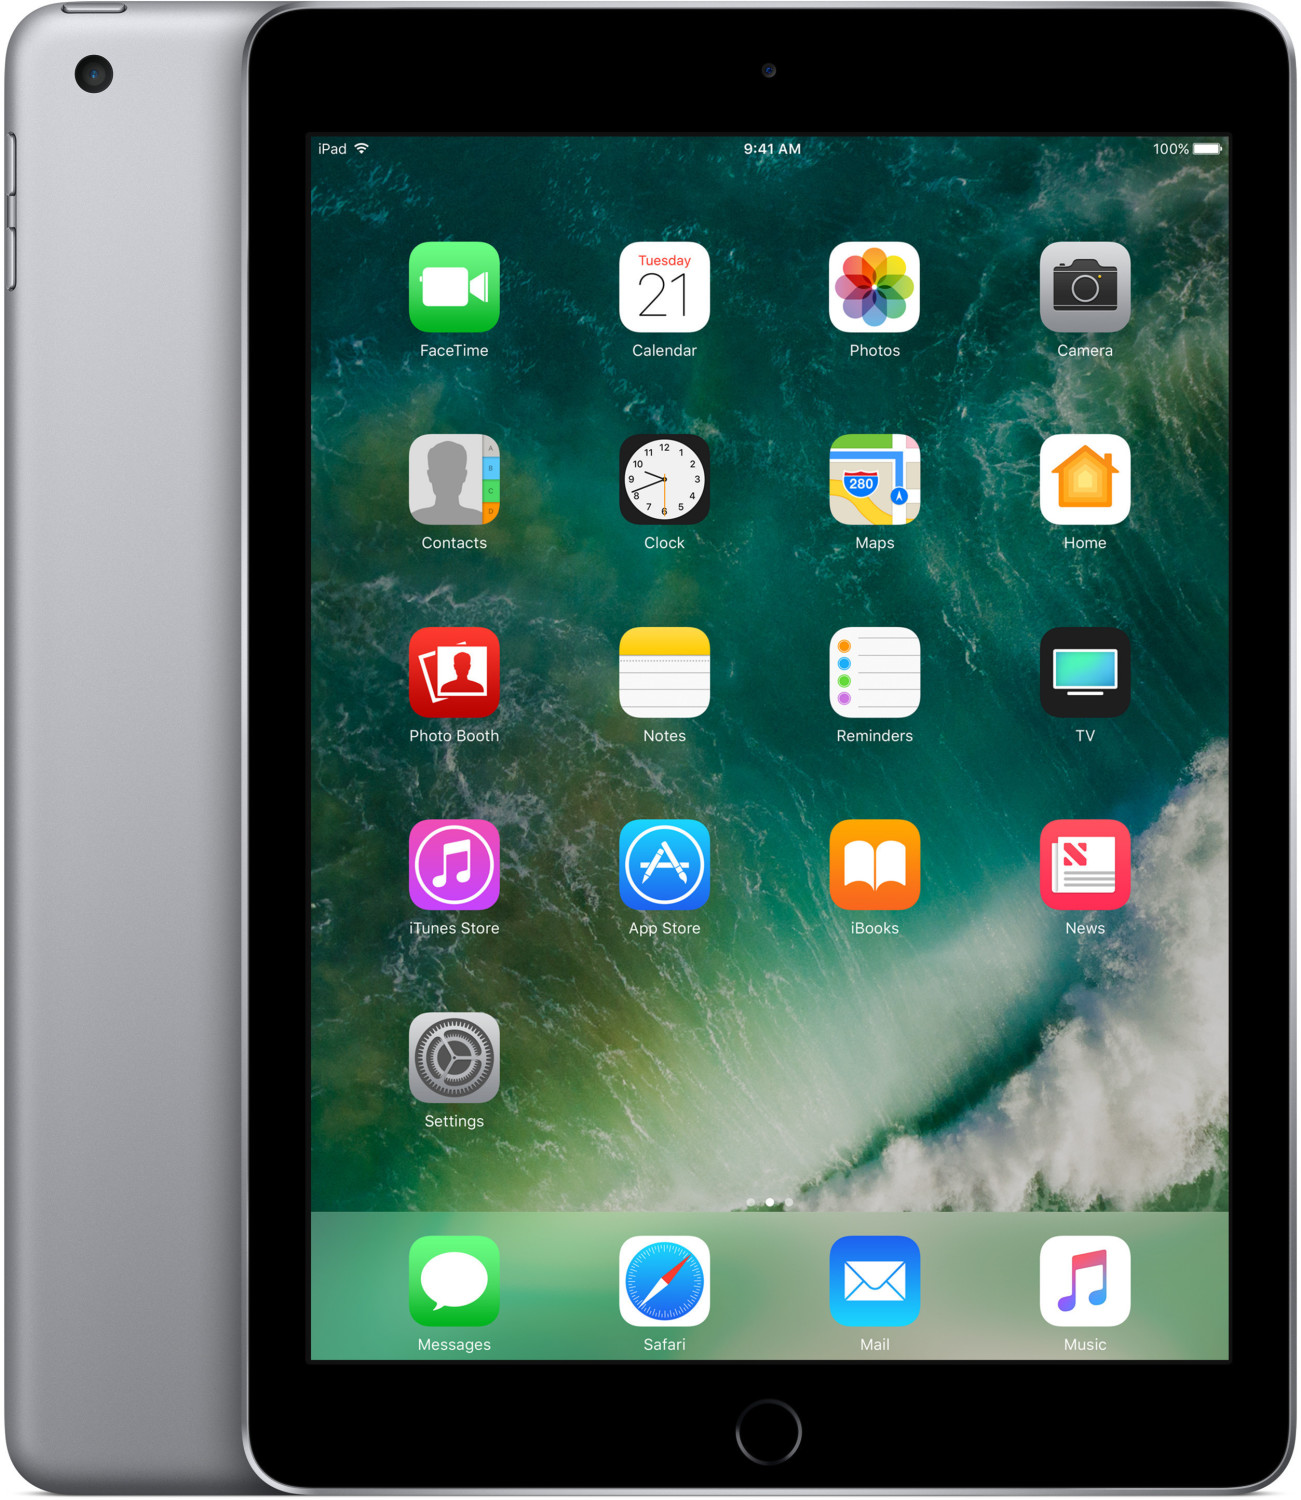 Apple iPad 128GB WiFi spacegrau (2018)